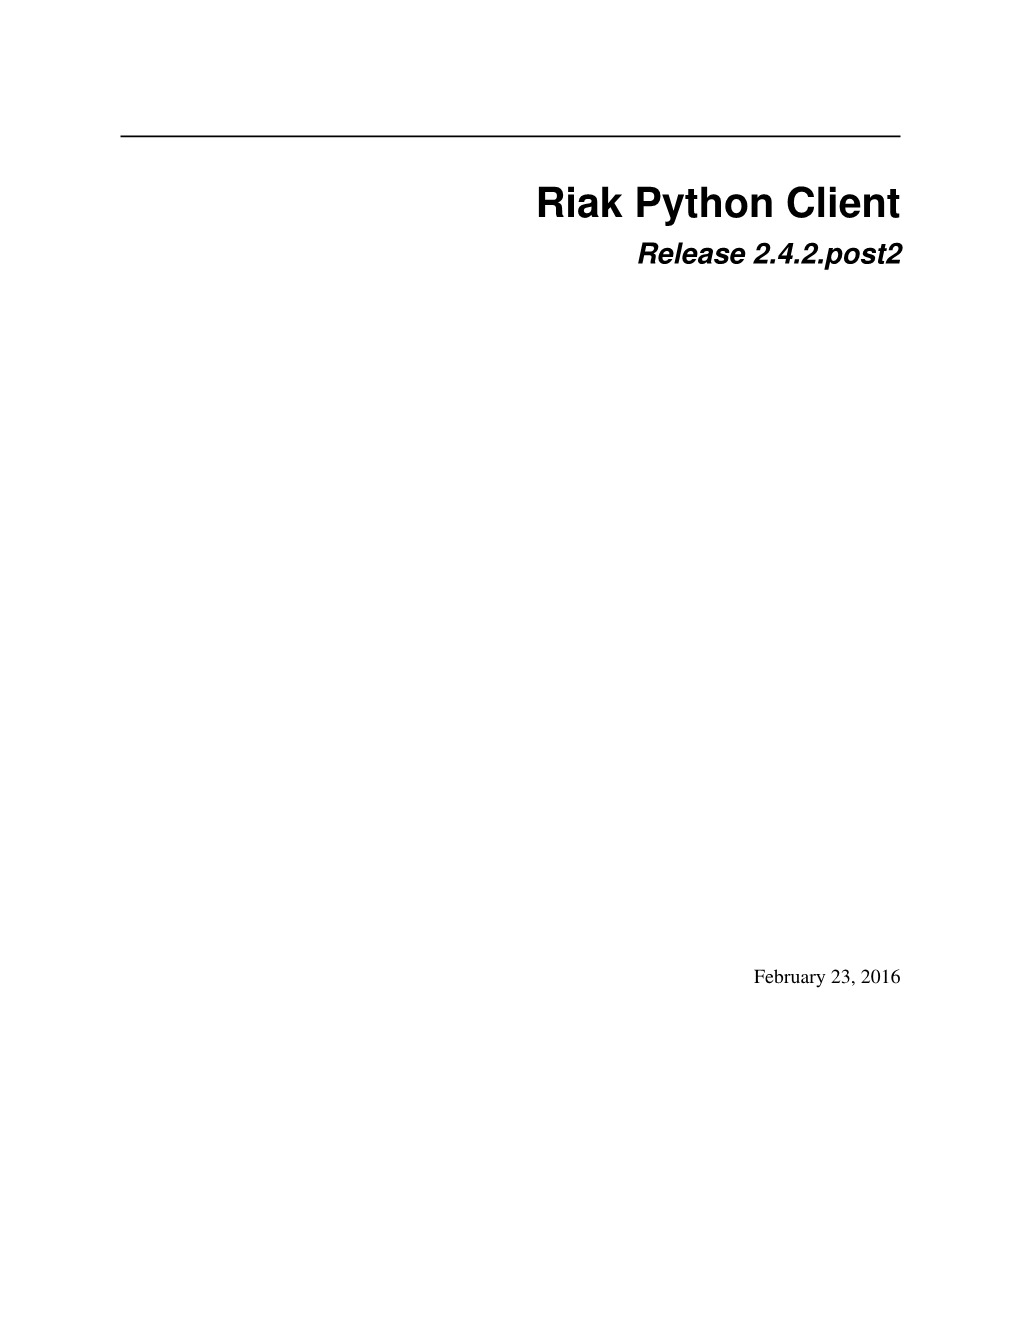 Riak Python Client Release 2.4.2.Post2